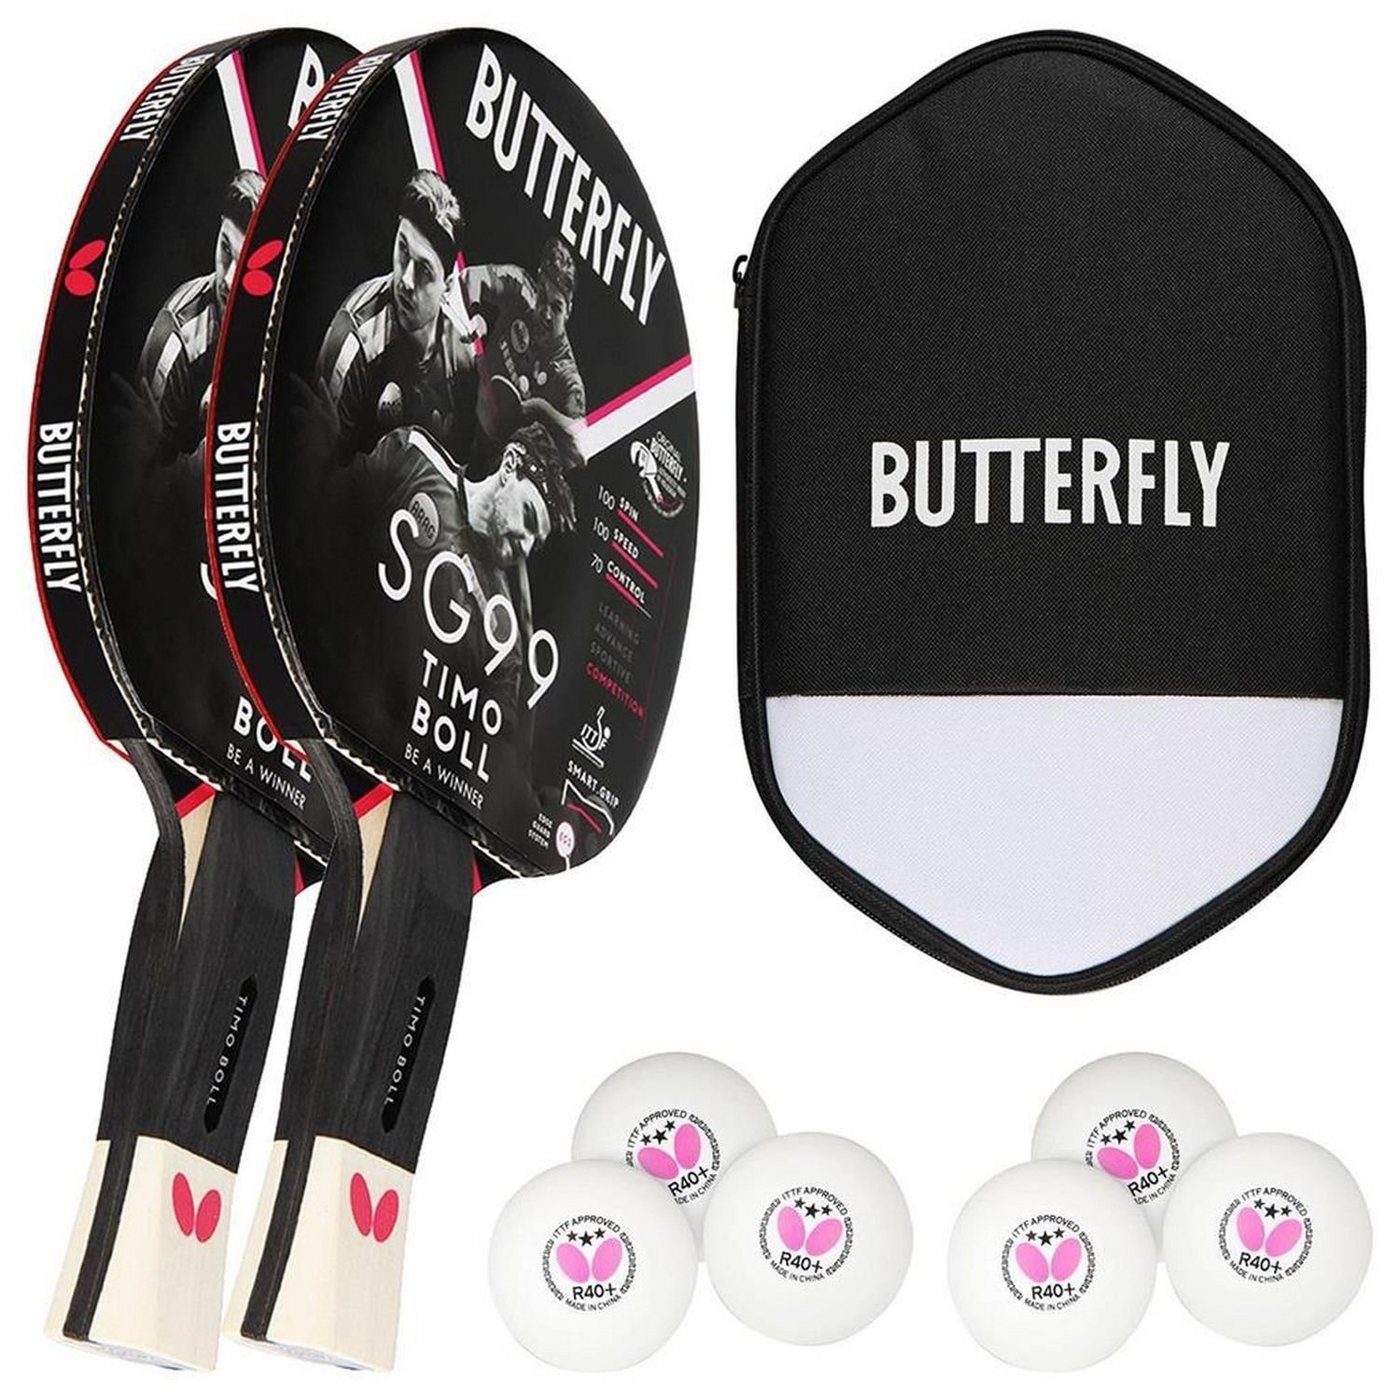 Butterfly Tischtennisschläger 2x Timo Boll SG99 + Cell Case 2 + Bälle, Tischtennis Schläger Set Tischtennisset Table Tennis Bat Racket von Butterfly